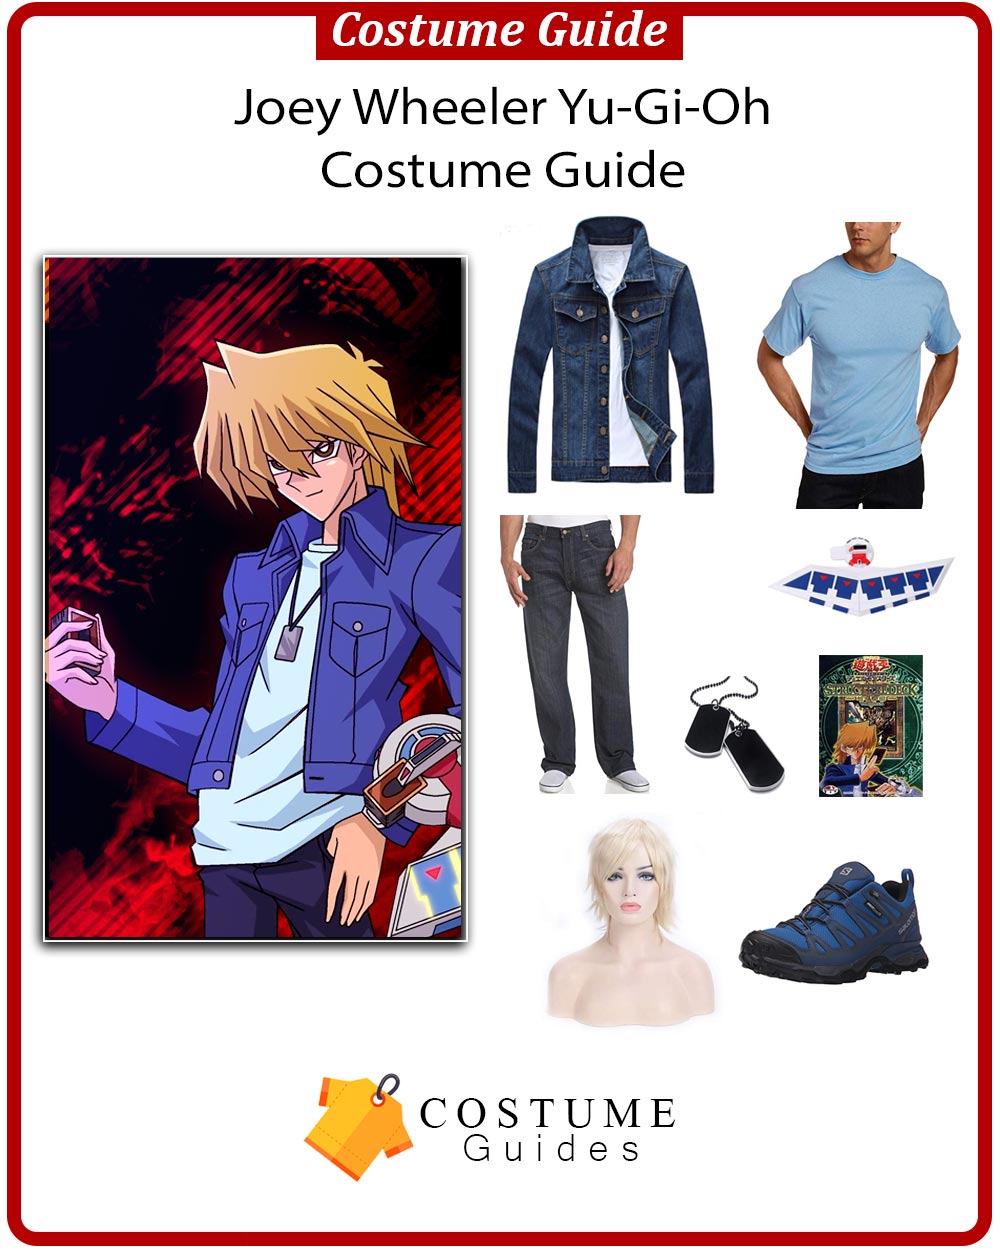 Joey Wheeler Yu-Gi-Oh Costume Guide